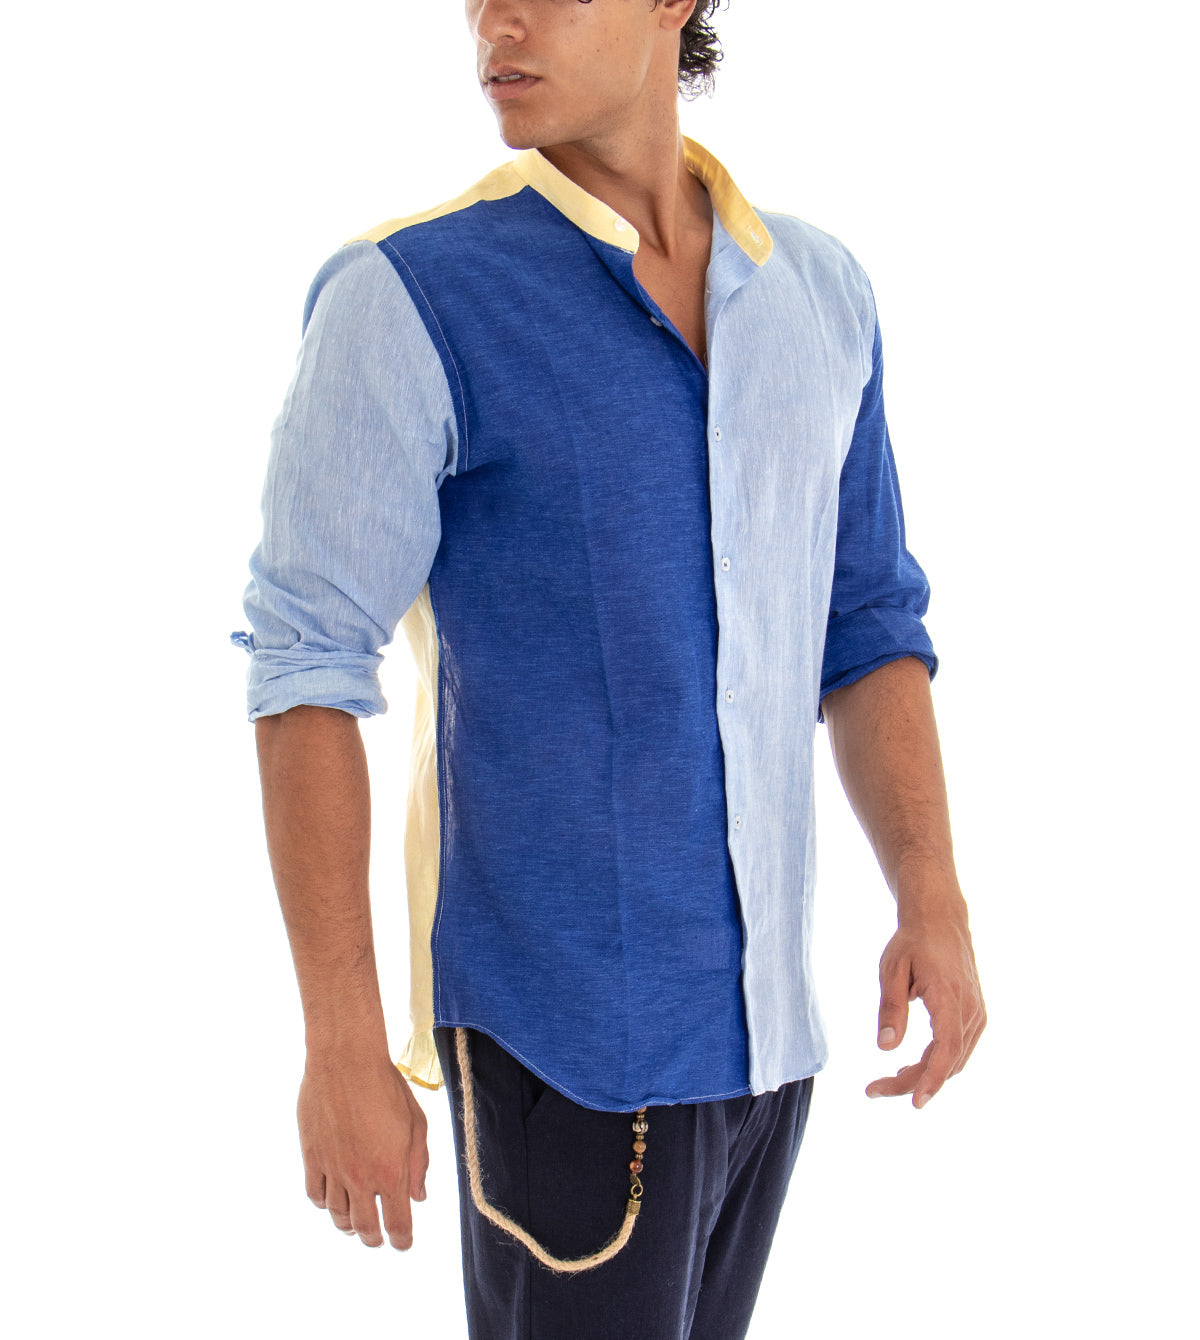 Camicia Uomo Collo Coreano Manica Lunga Blu Regular Fit Melangiata Lino GIOSAL-C1727A